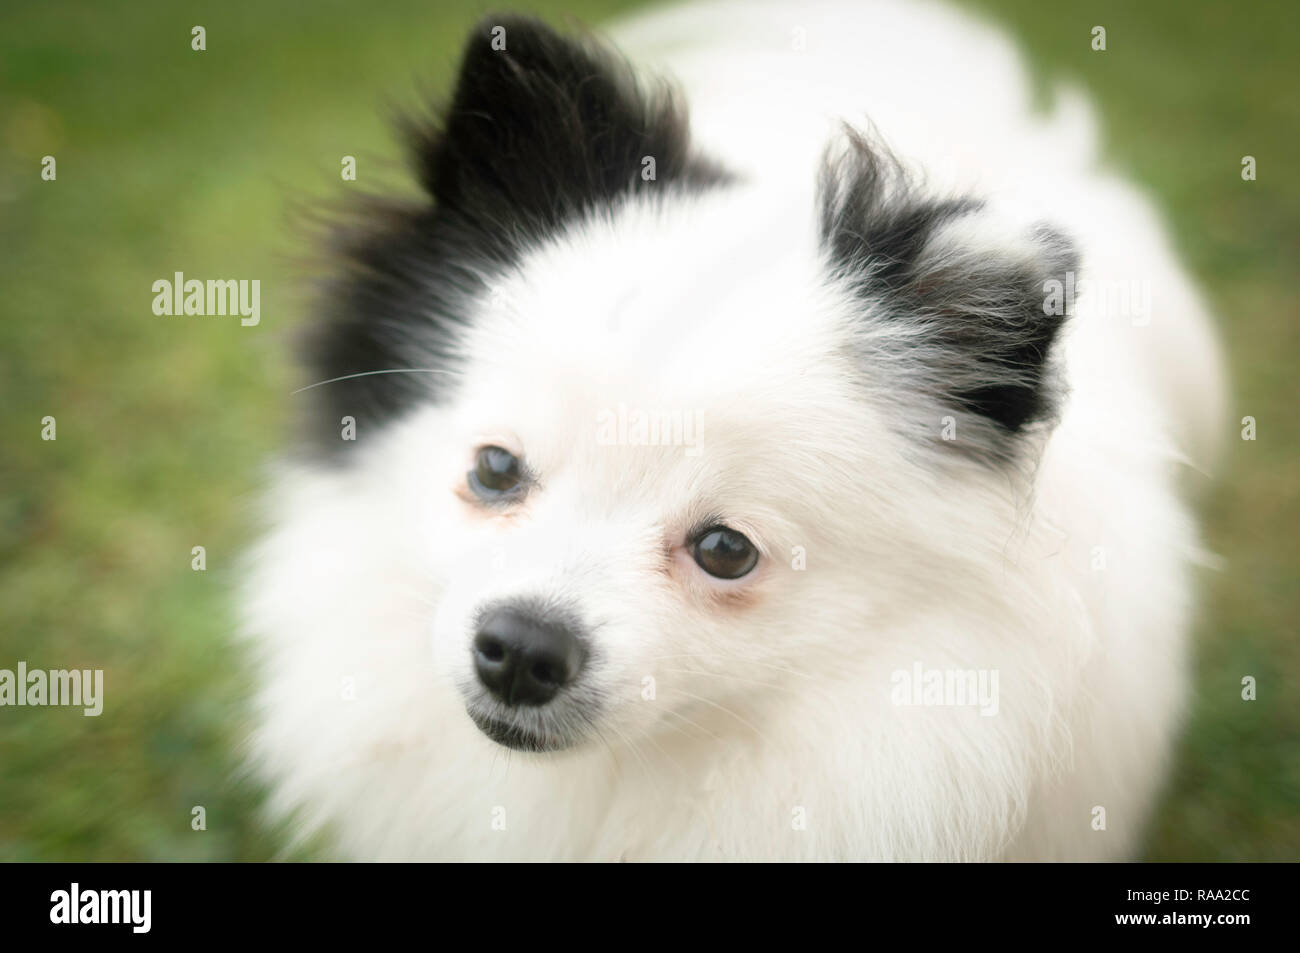 Black and White Pomeranian Dog Stock Photo - Alamy